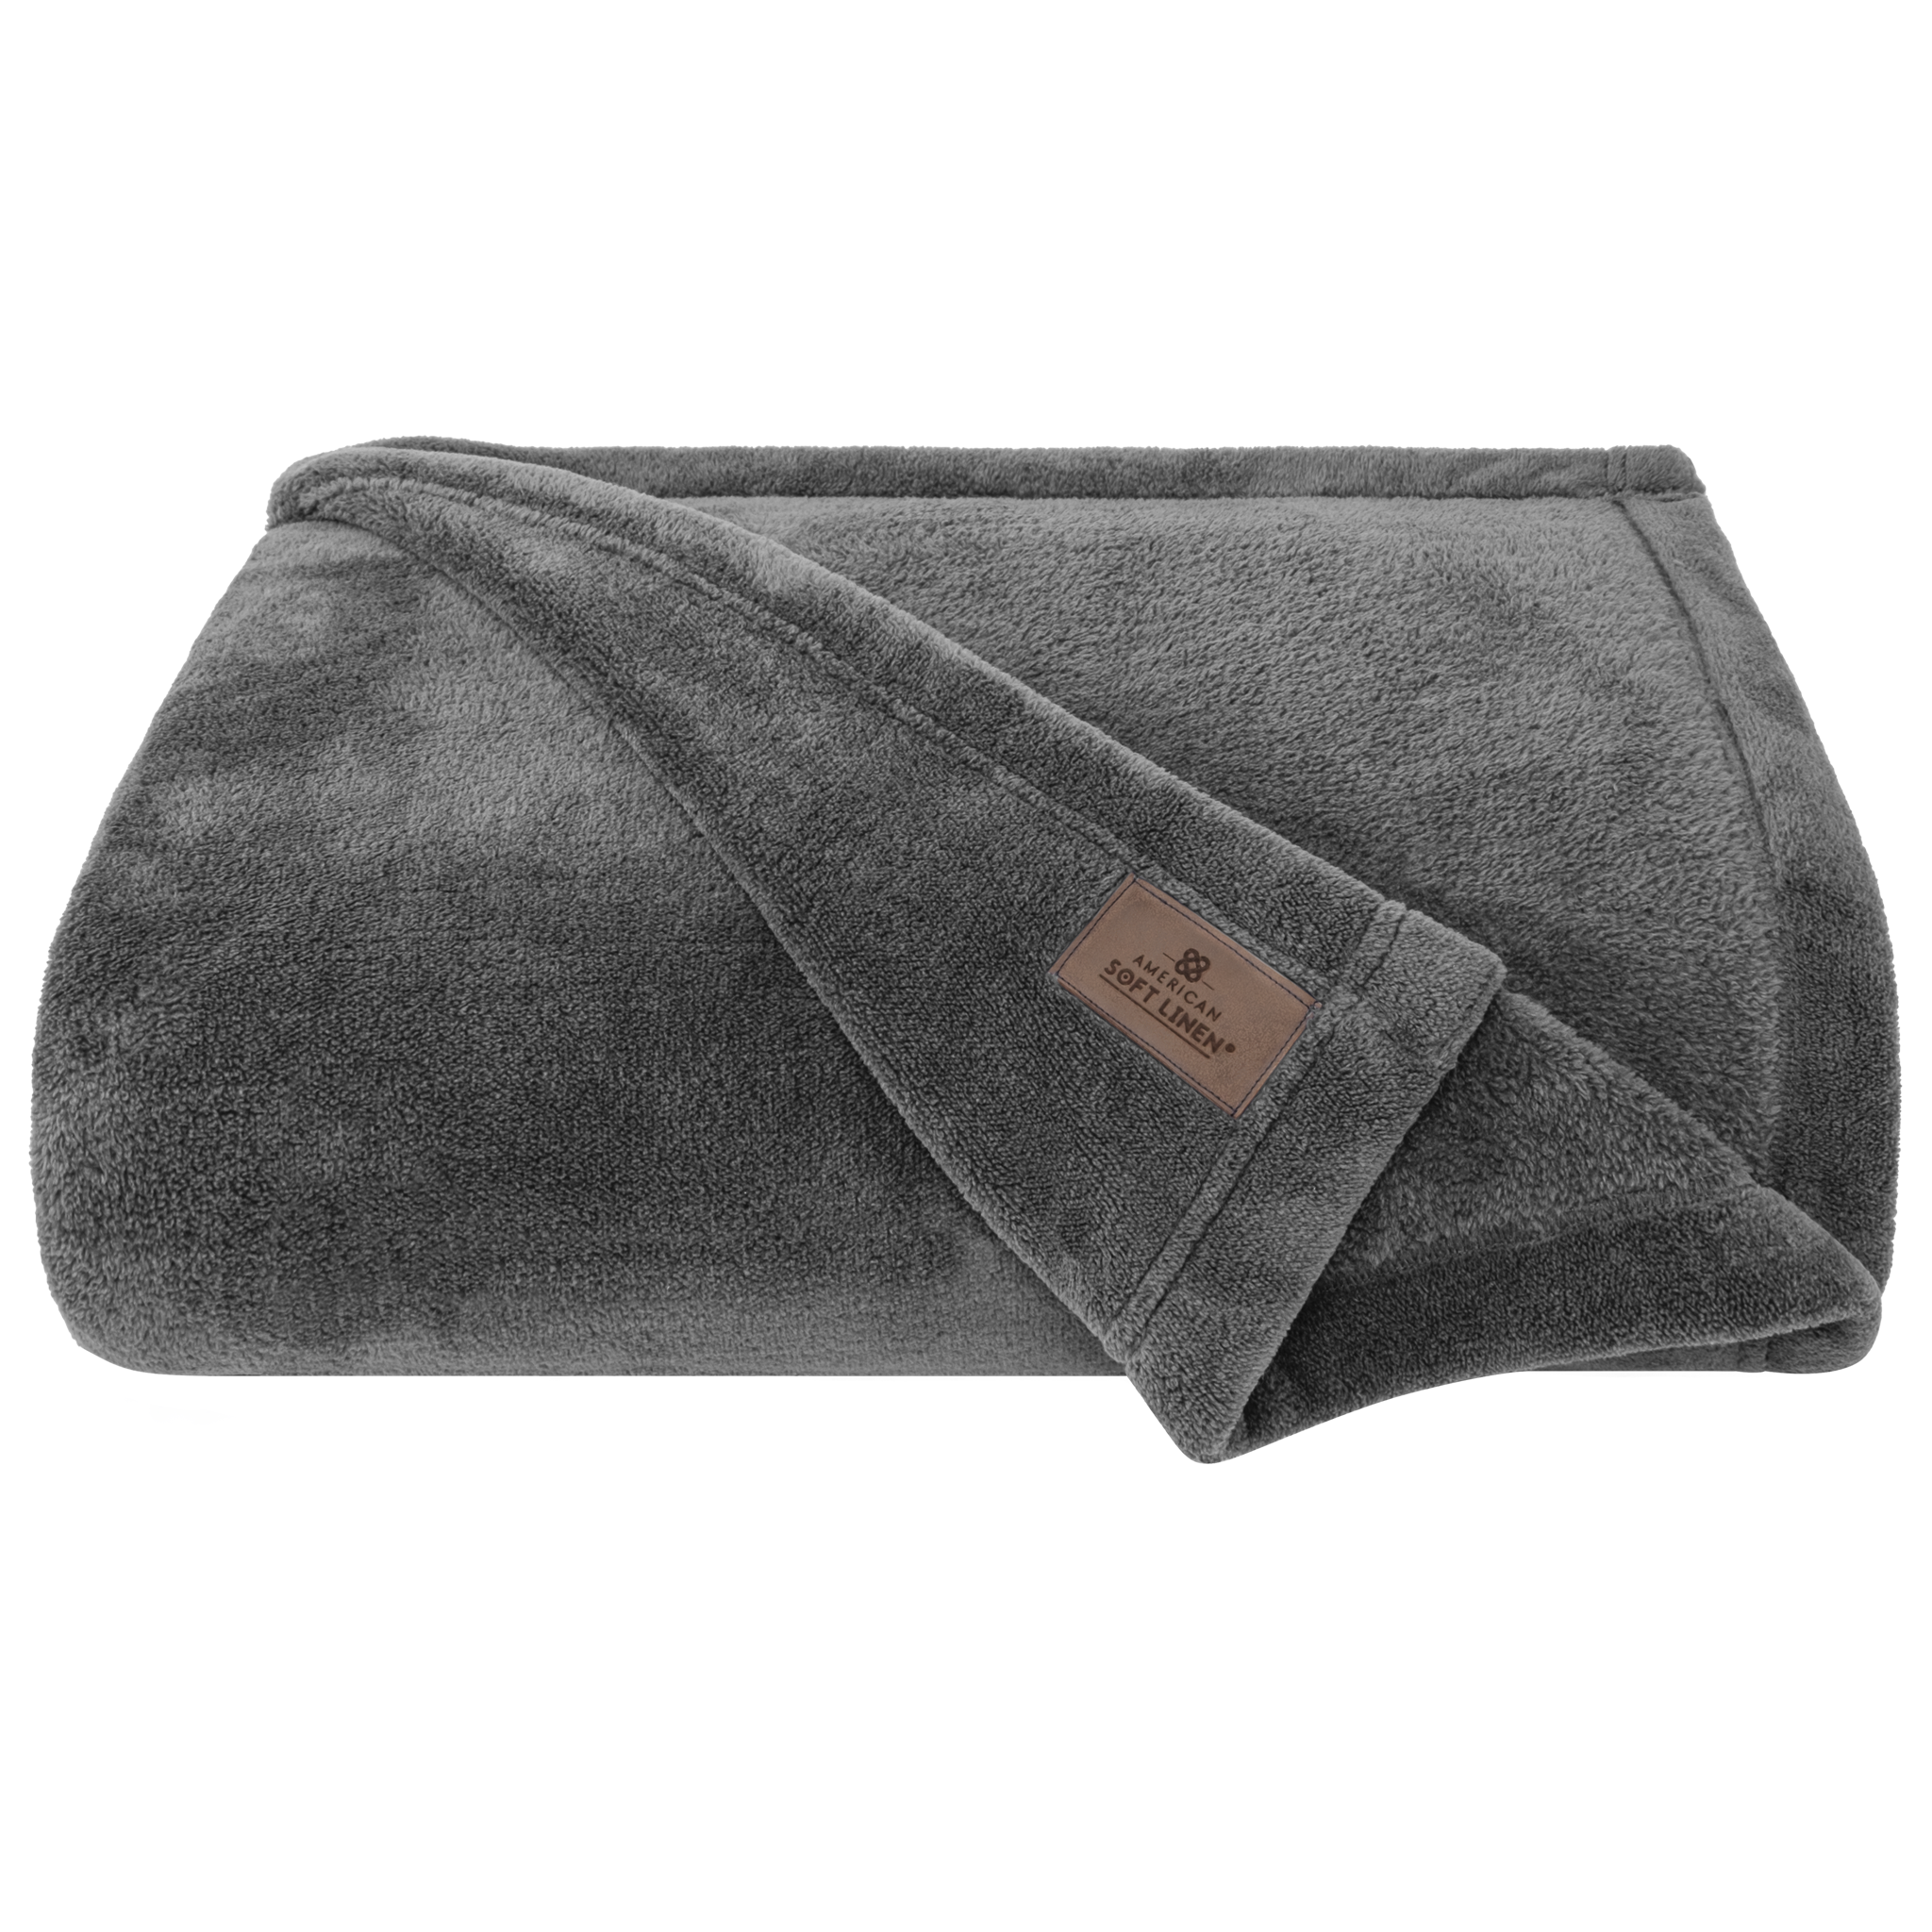 American Soft Linen - Bedding Fleece Blanket - Wholesale - 9 Set Case Pack - Queen Size 85x90 inches - Gray - 3